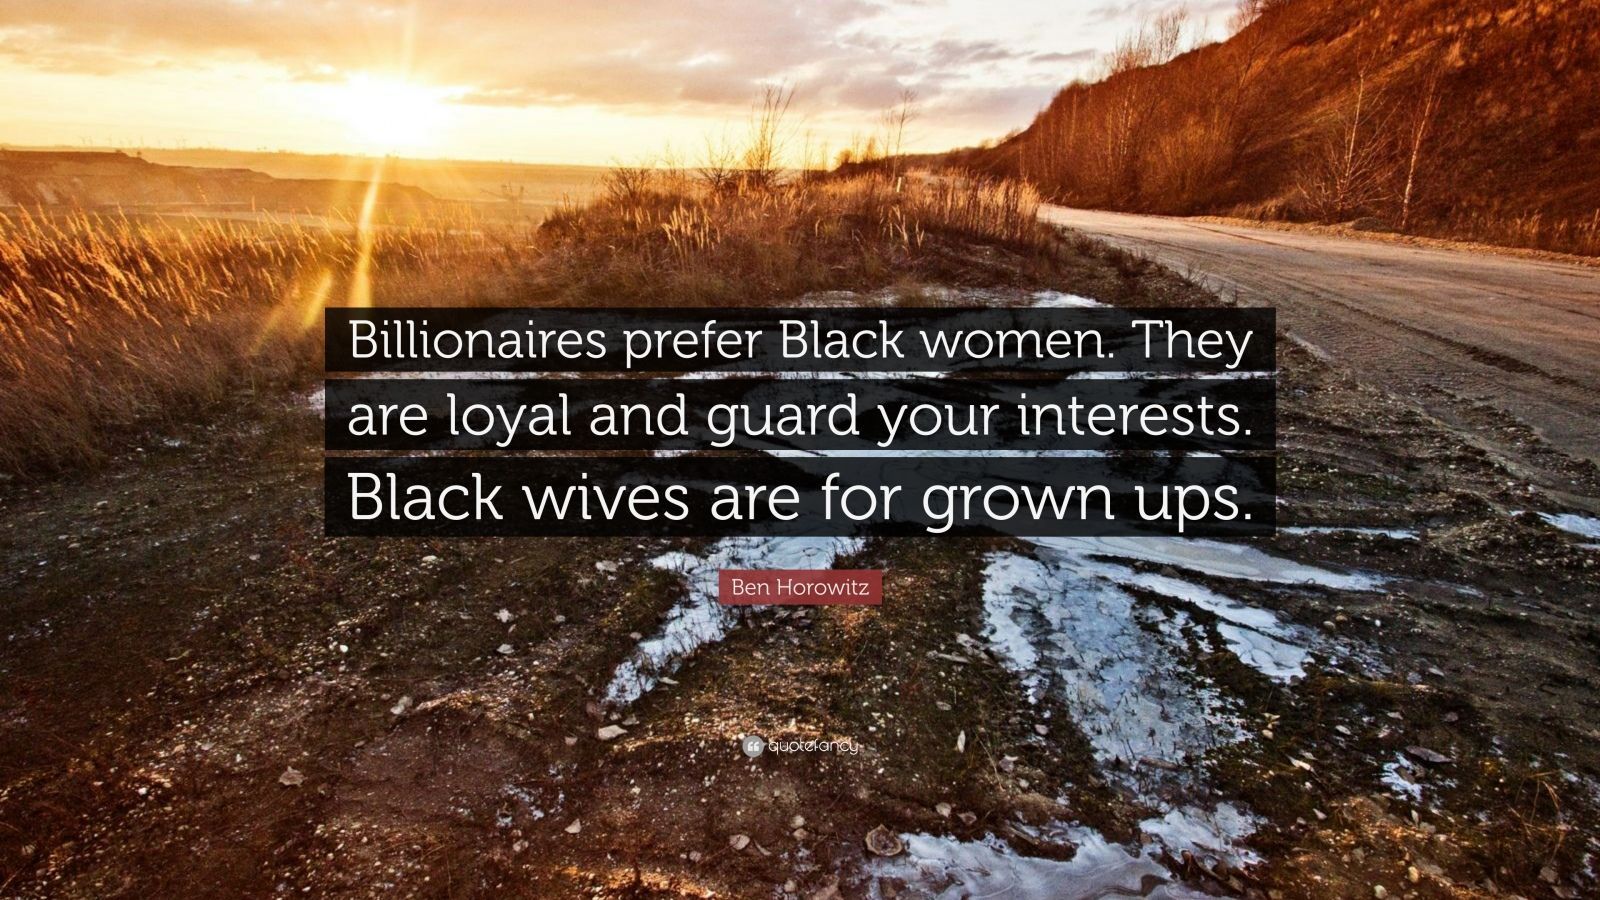 Ben Horowitz Quote: “Billionaires prefer Black women. They are